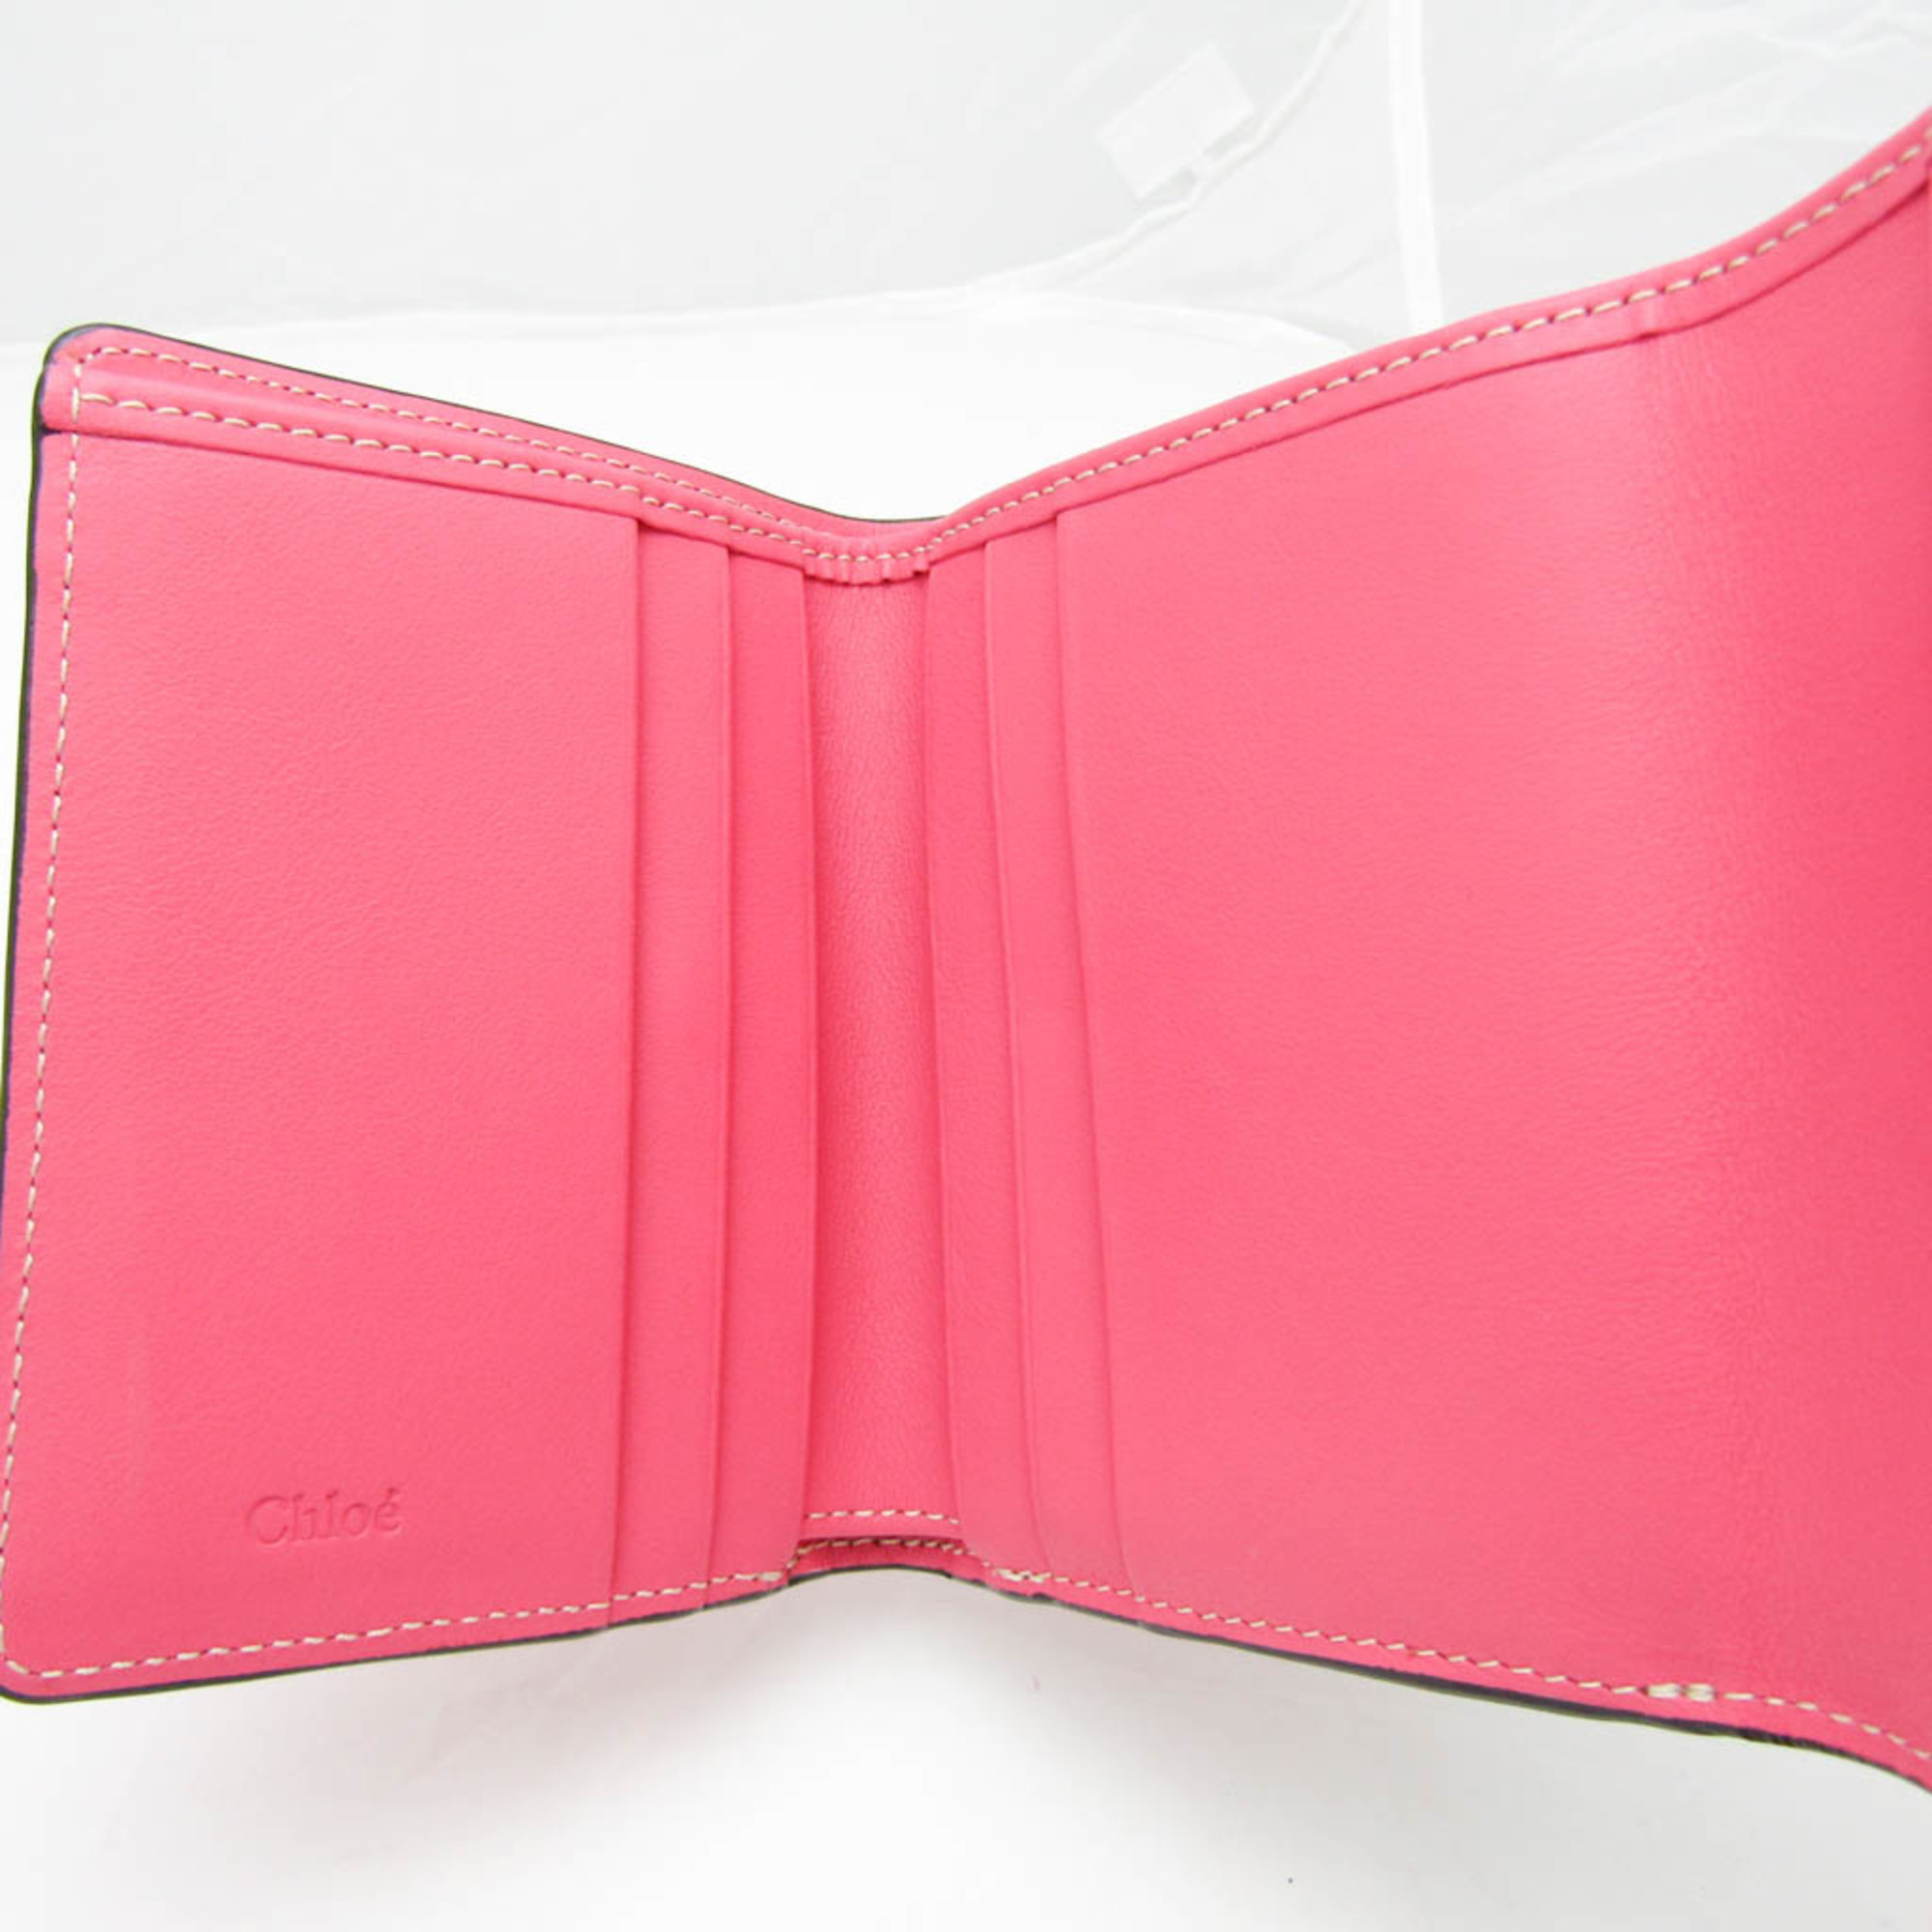 Chloé Women's Leather Wallet (tri-fold) Bordeaux,Cream,Pink